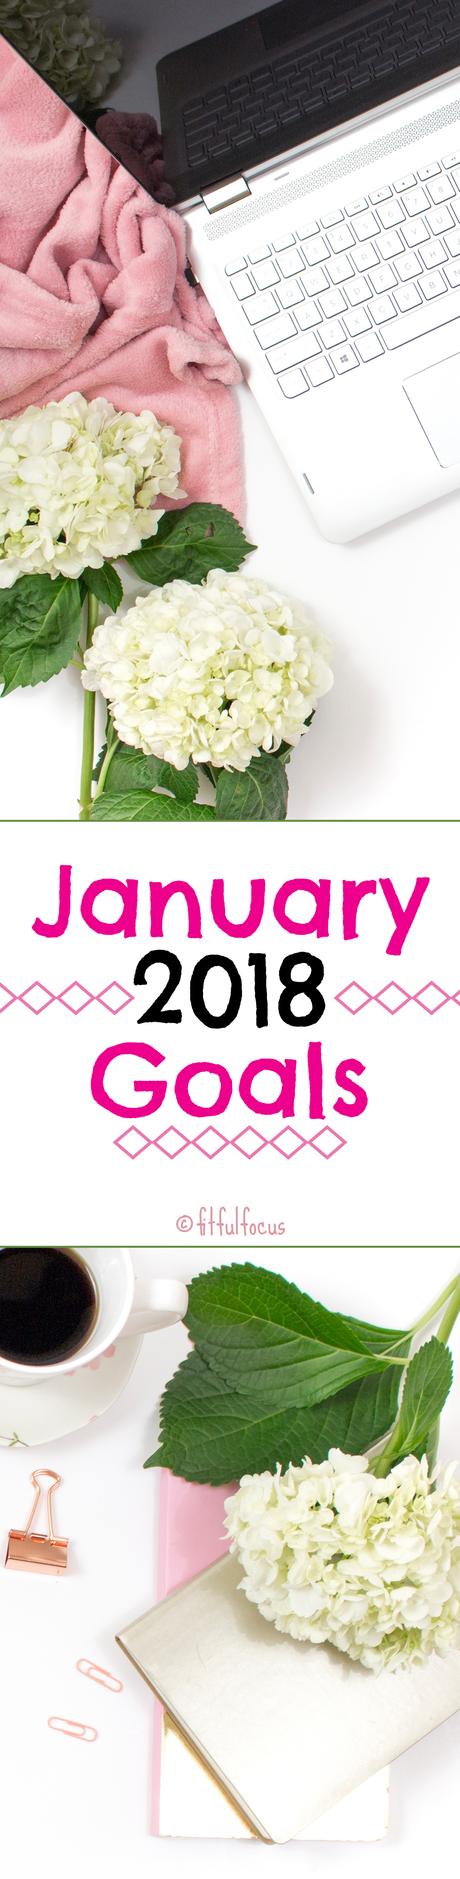 January 2018 Goals